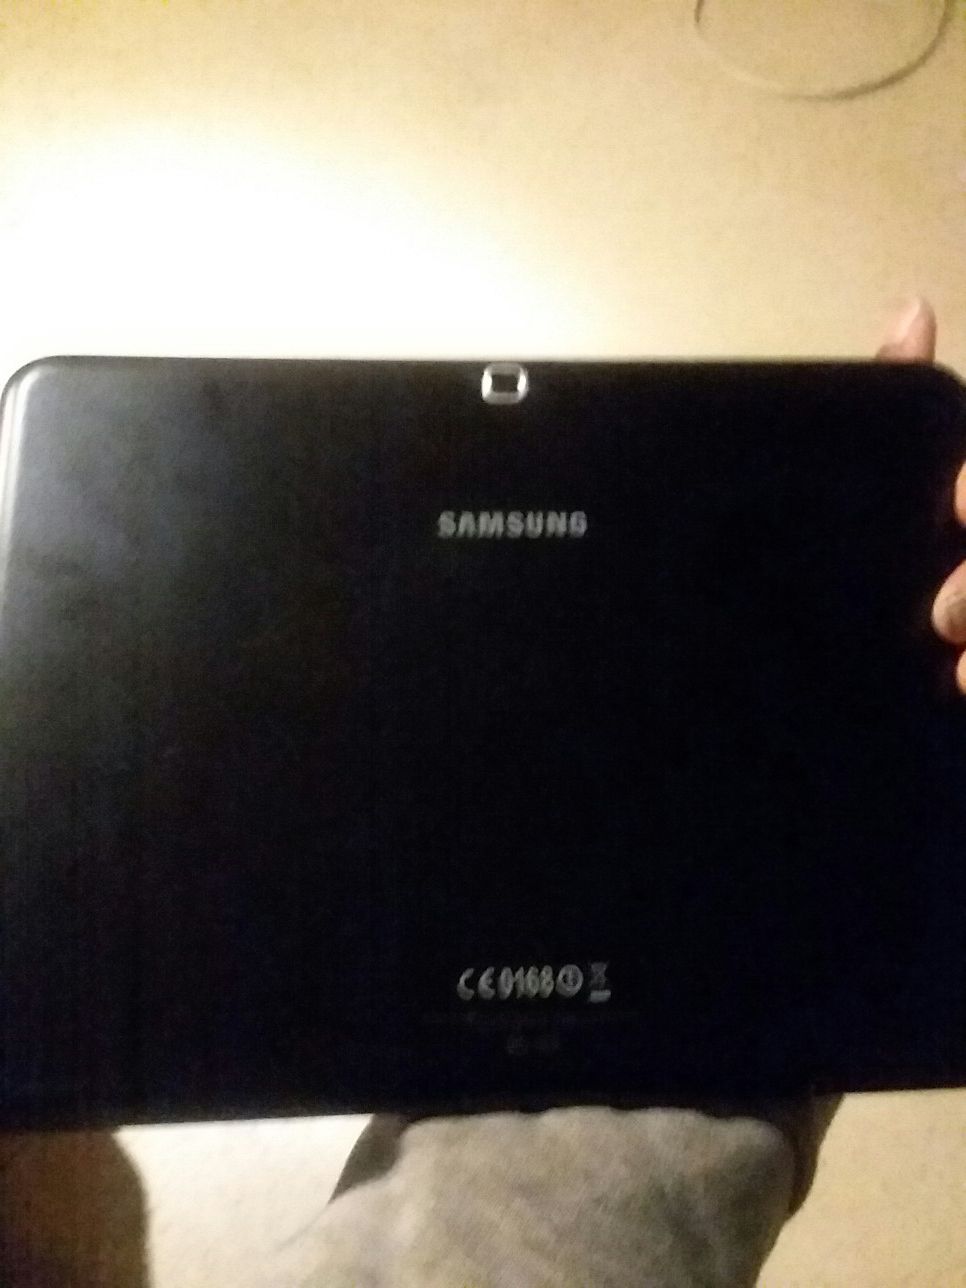 samsung galaxy tablet never use still in good condition...